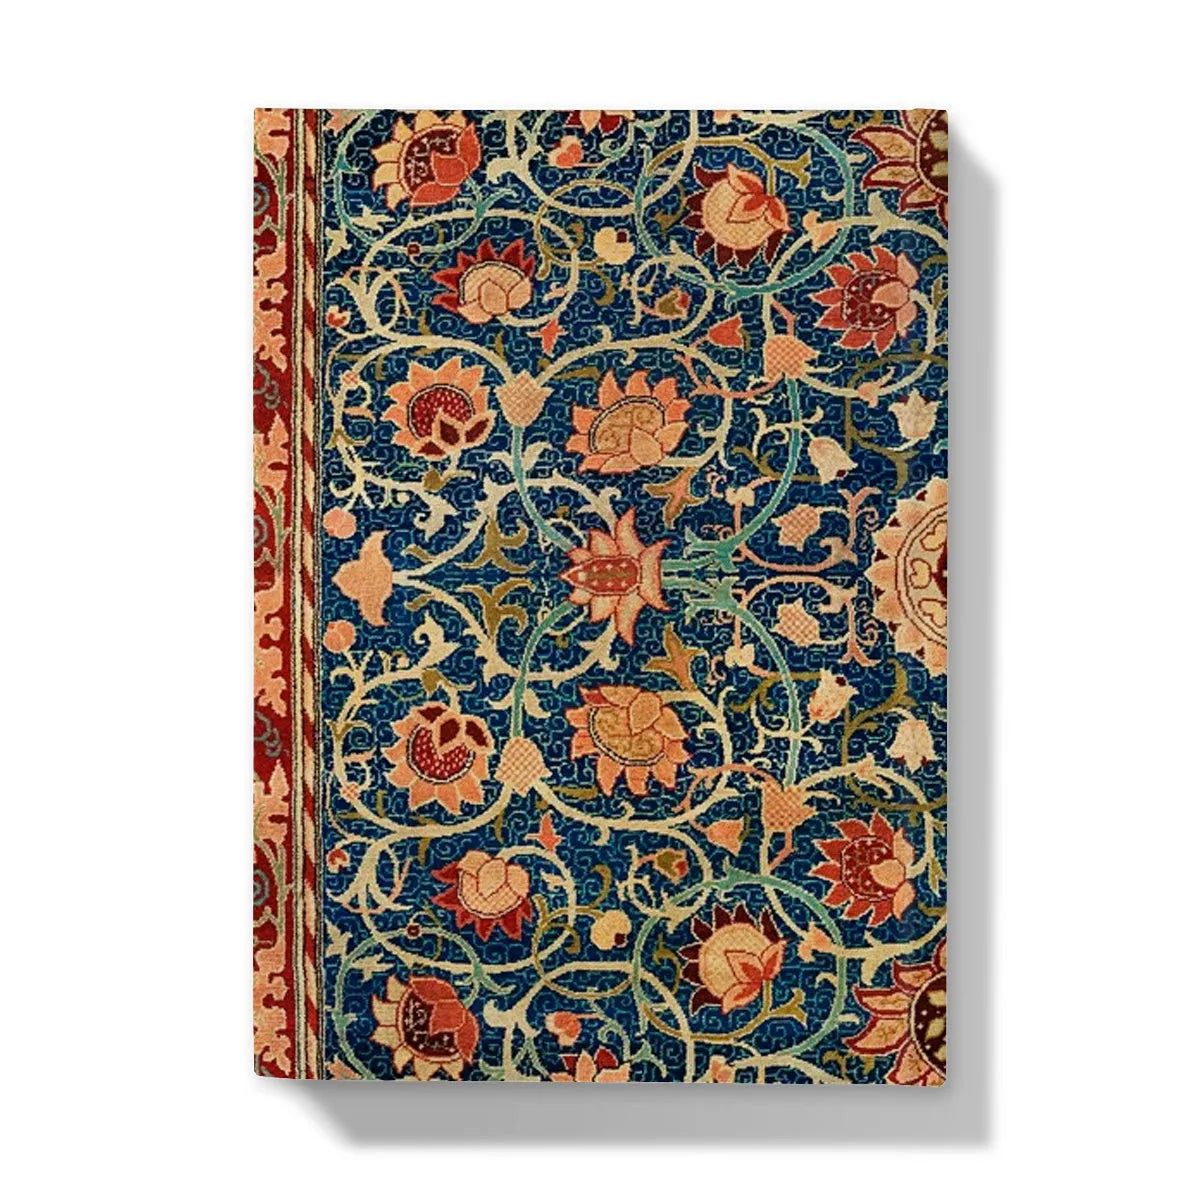 Holland Park Carpet By William Morris Hardback Journal - Notebooks & Notepads - Aesthetic Art